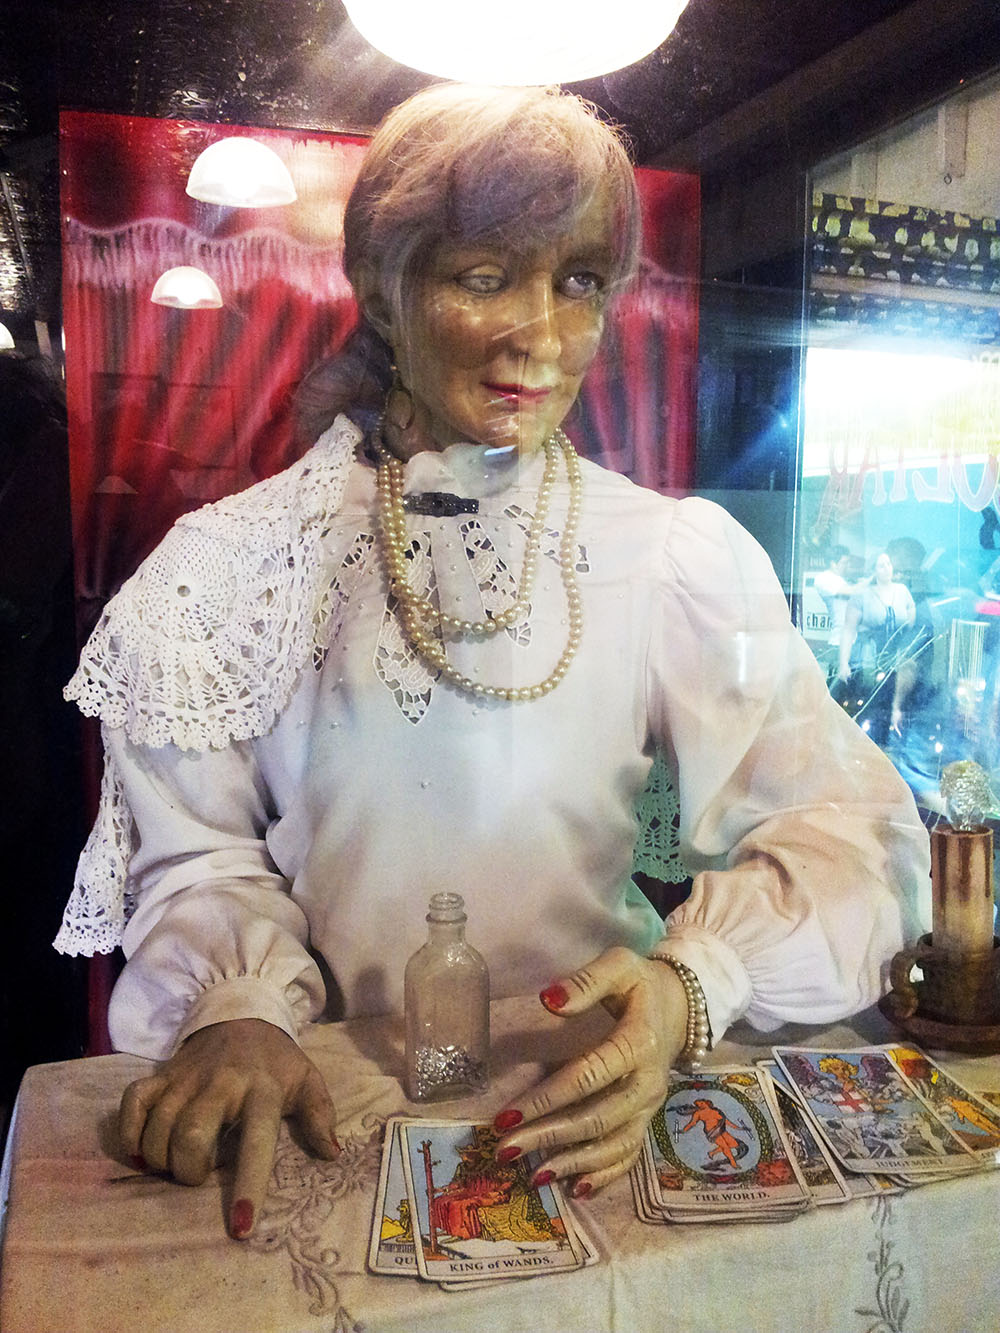 Creepy old granny automaton fortune teller.